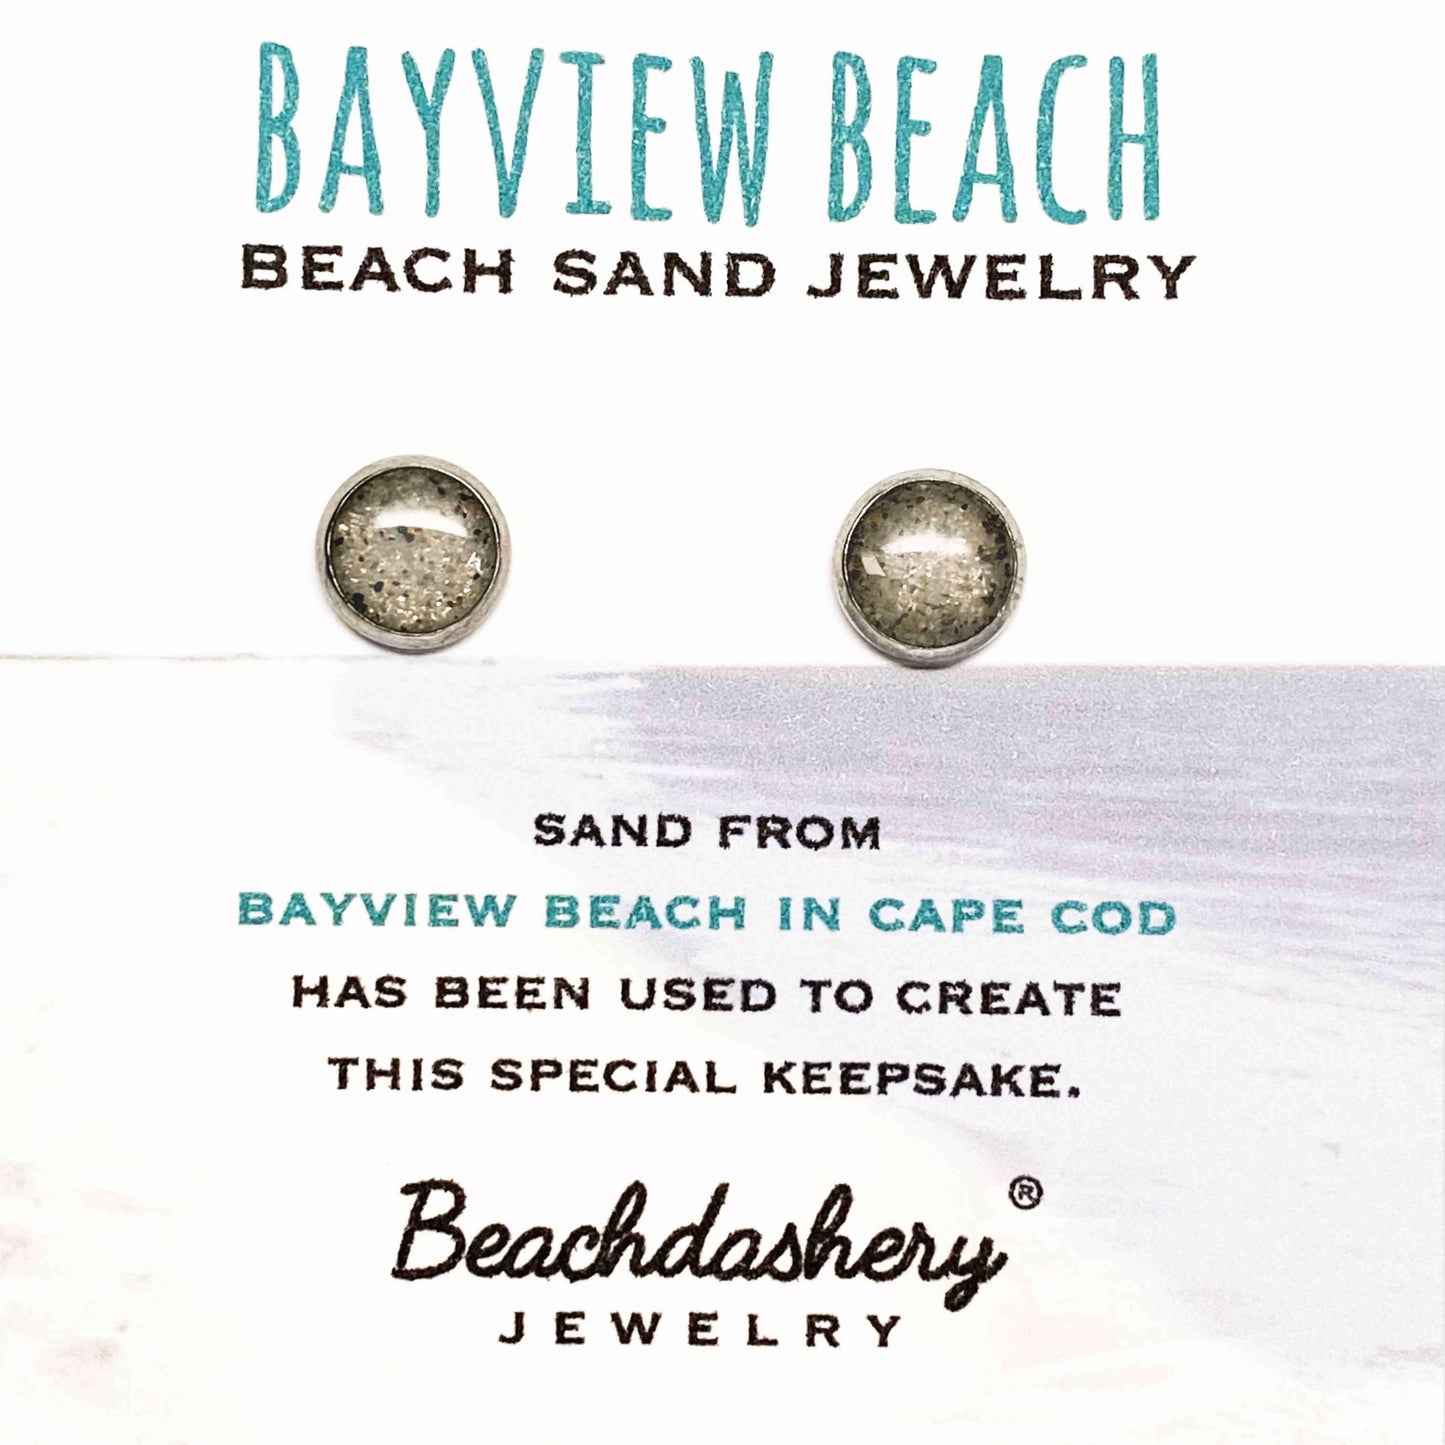 Bayview Beach Sand Jewelry Beachdashery® Jewelry